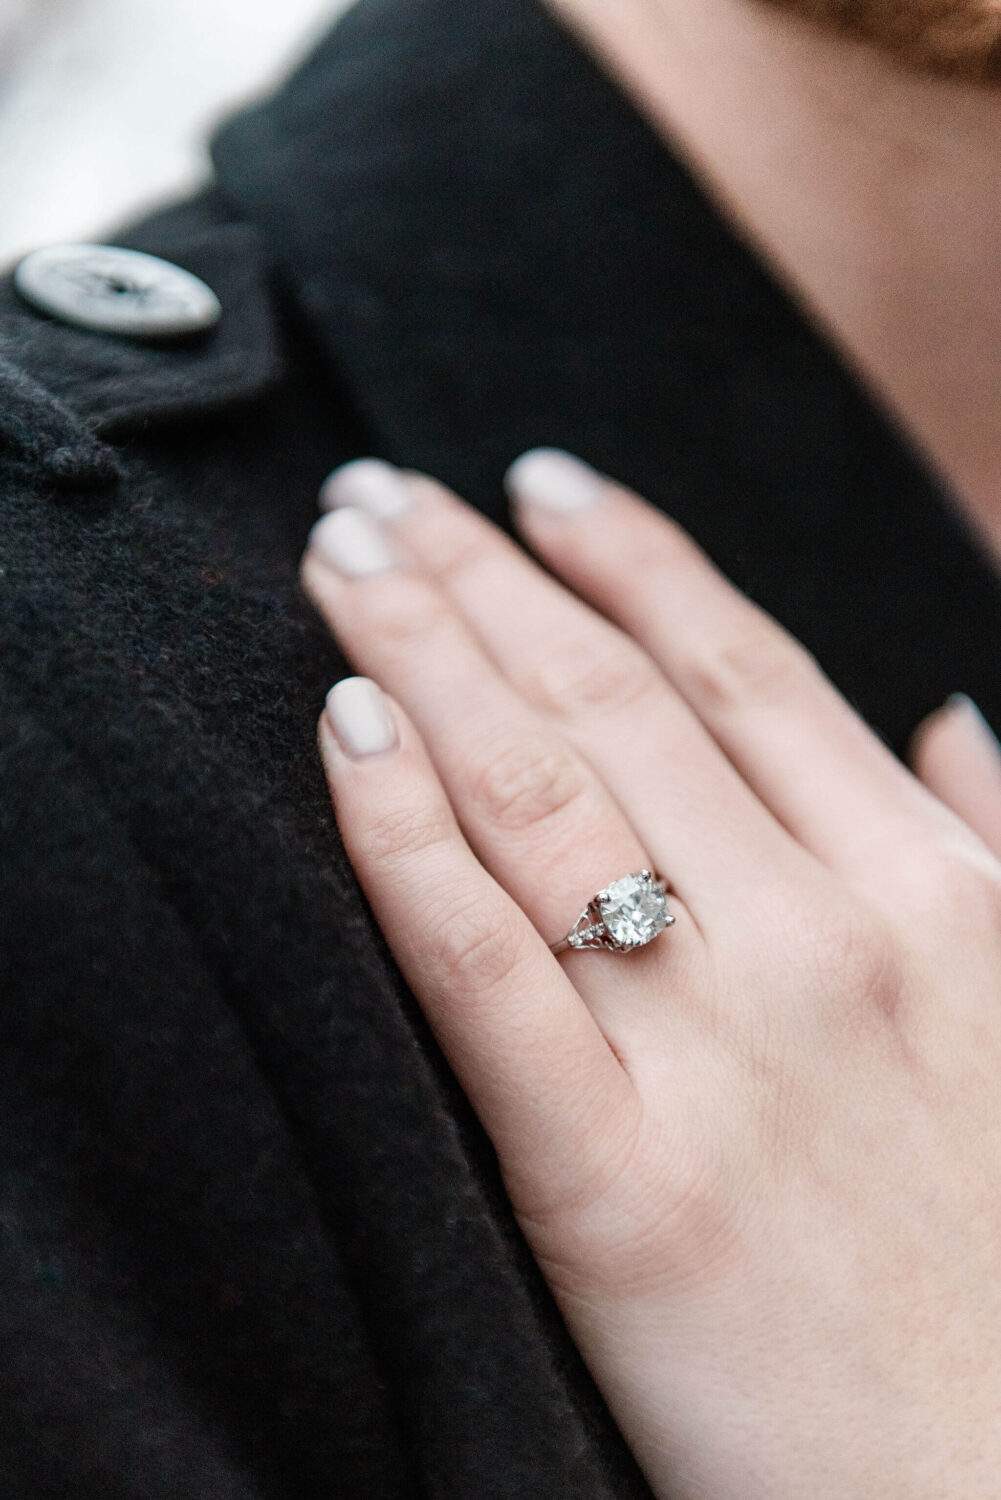 Engagement ring shot during a Paris couple shoot